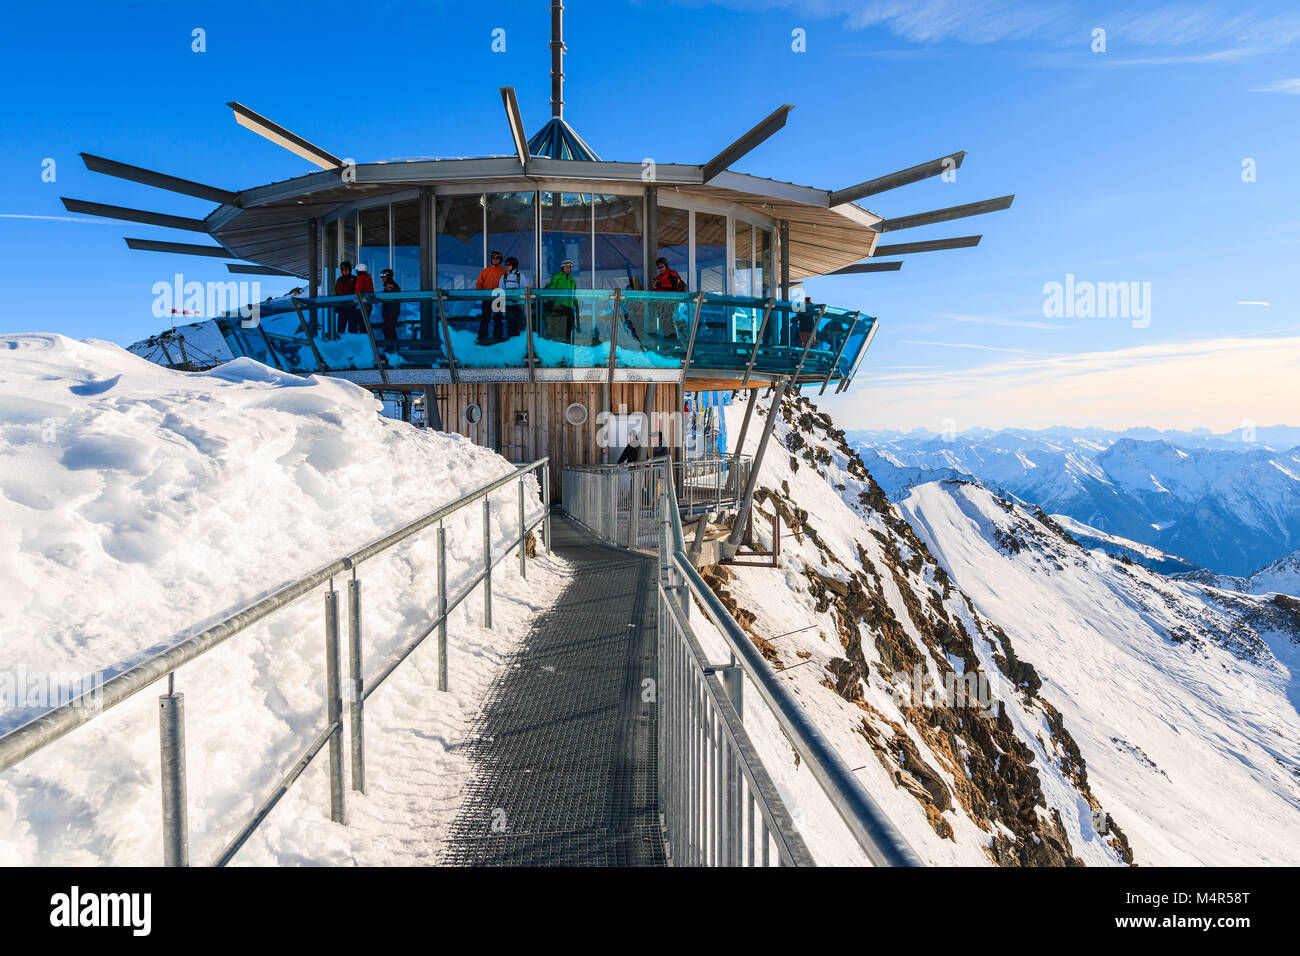 OBERGURGL-HOCHGURGL SKI RESORT, AUSTRIA - JAN 30, 2018: "Mountain Star" restaurant located at highest point of the ski resort at over 3000 meters abov Stock Photo